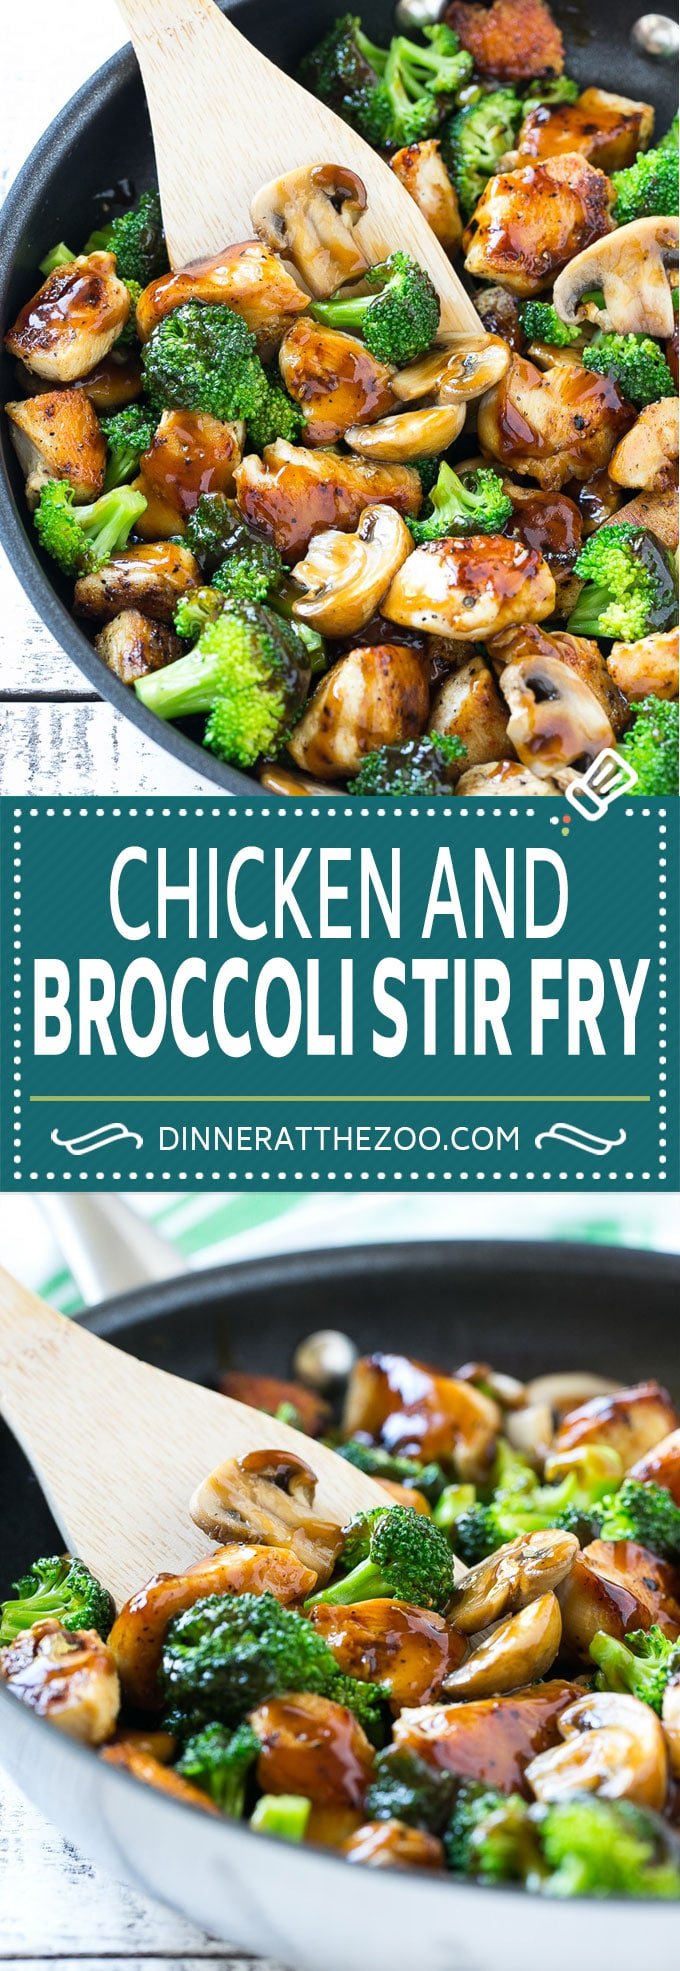 Chicken and Broccoli Stir Fry Recipe | Chicken Stir Fry #chicken #stirfry #broccoli #mushrooms #dinner #healthy #dinneratthezoo